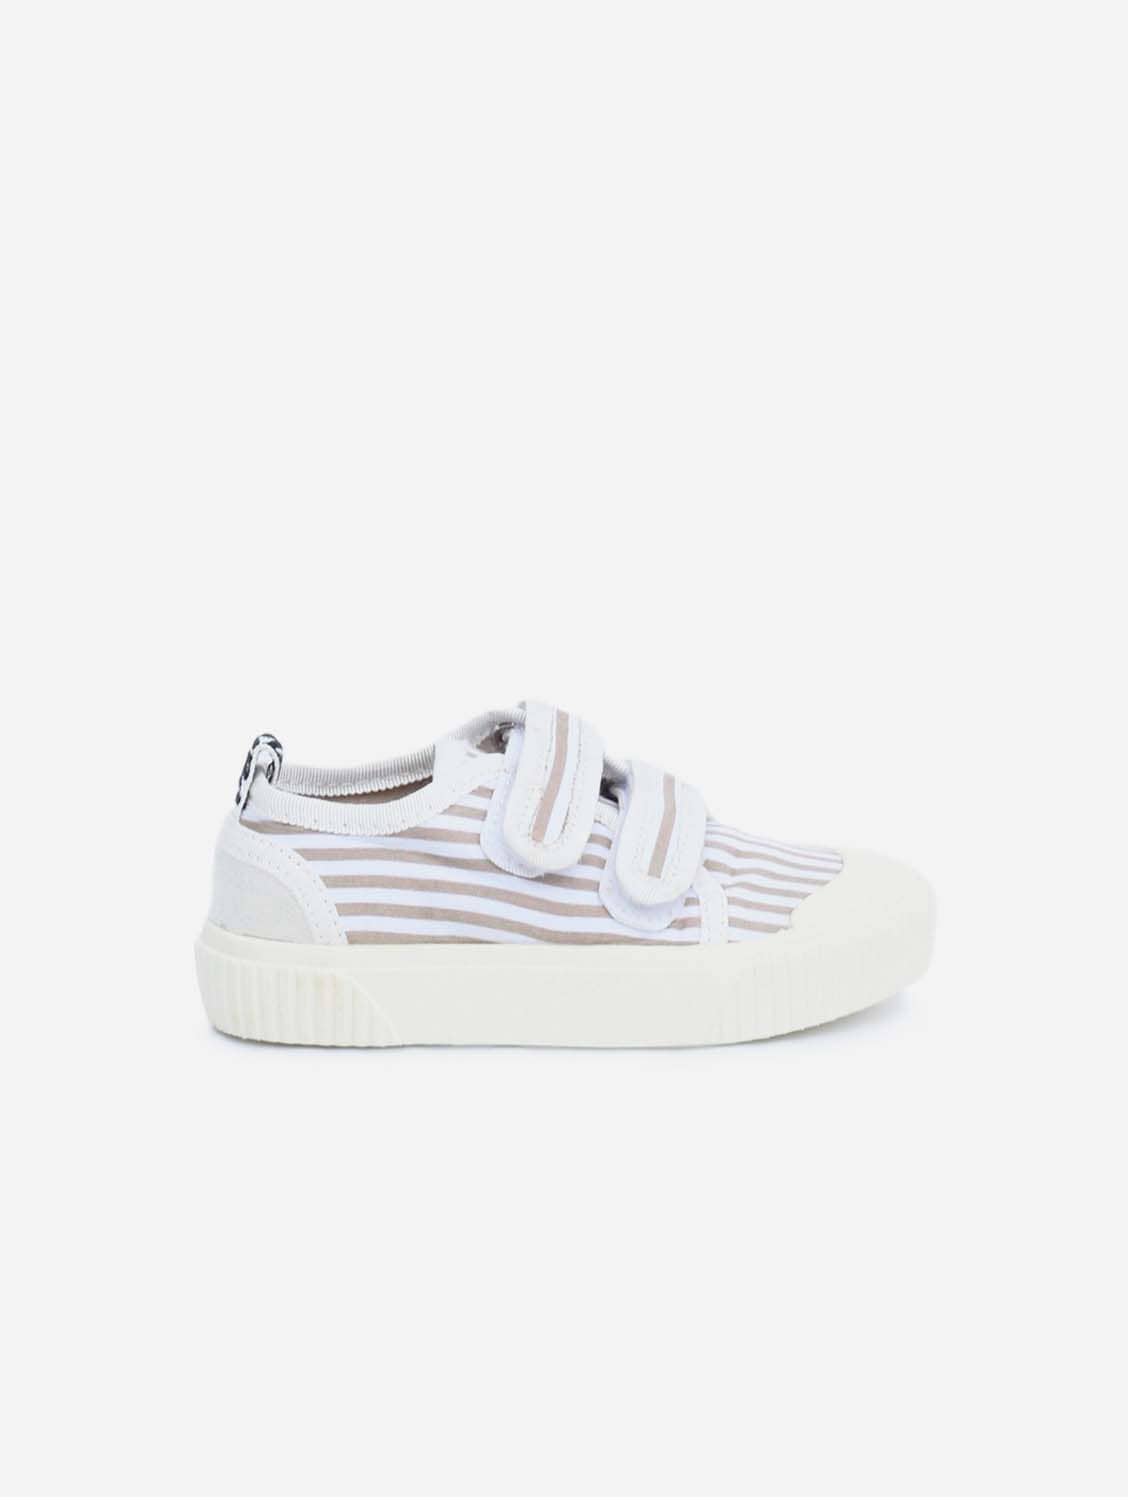 PAIZO SELENE, Stripe Velcro Sneakers 28 (16.5cm)